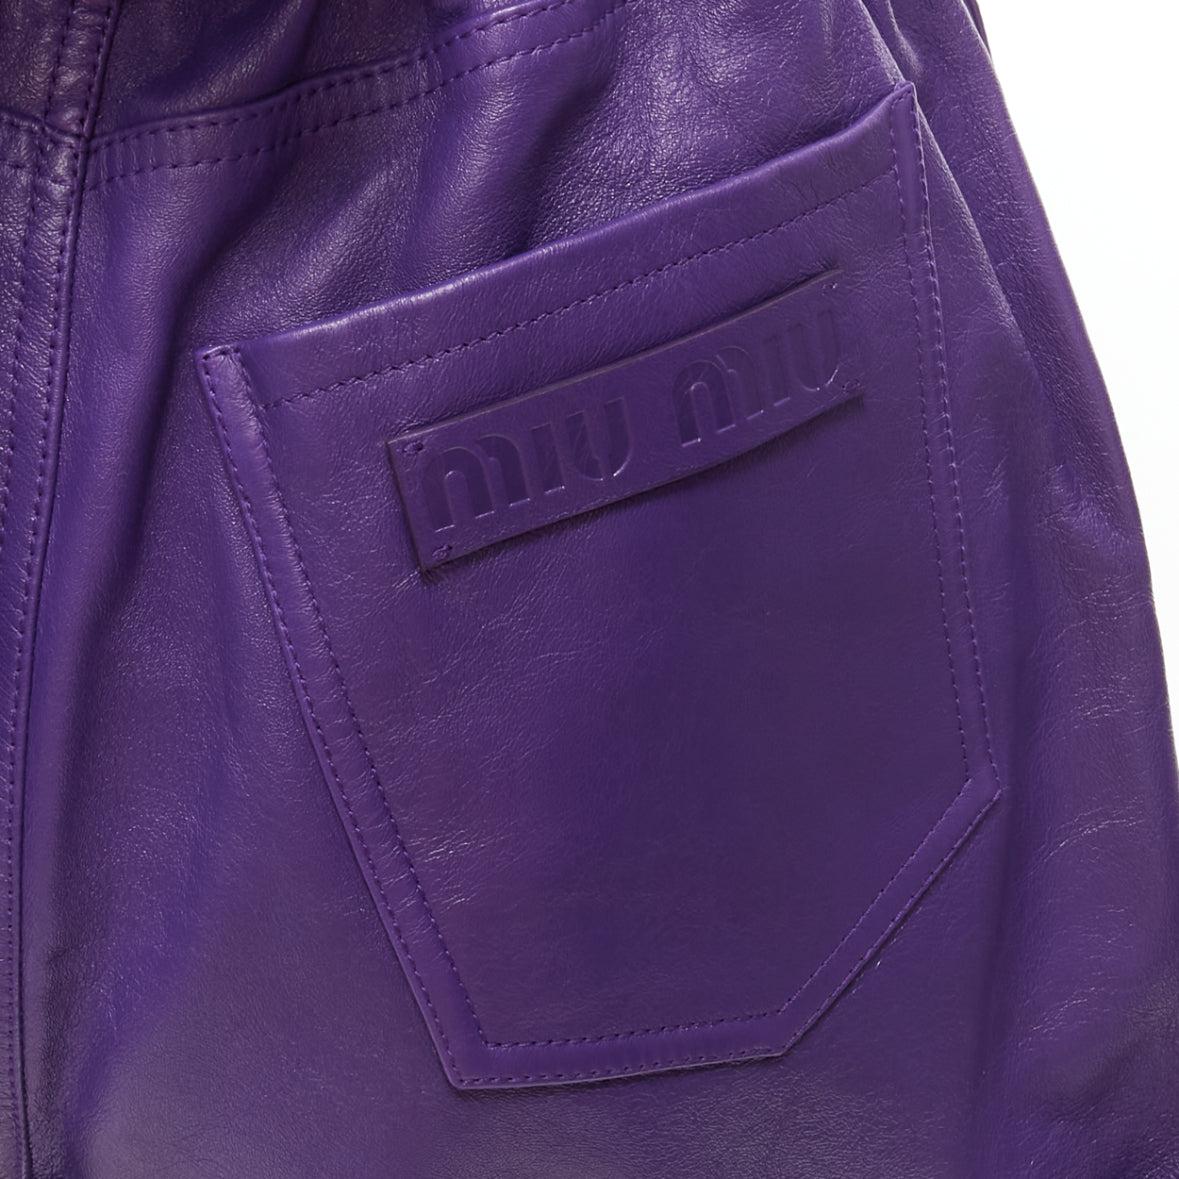 MIU MIU 2019 Runway purple lambskin high waisted rolled hems paperbag shorts IT38 XS Hailey Bieber
Reference: TGAS/D00711
Brand: Miu Miu
Designer: Miuccia Prada
Collection: 2019 - Runway
Material: Lambskin Leather
Color: Purple
Pattern: